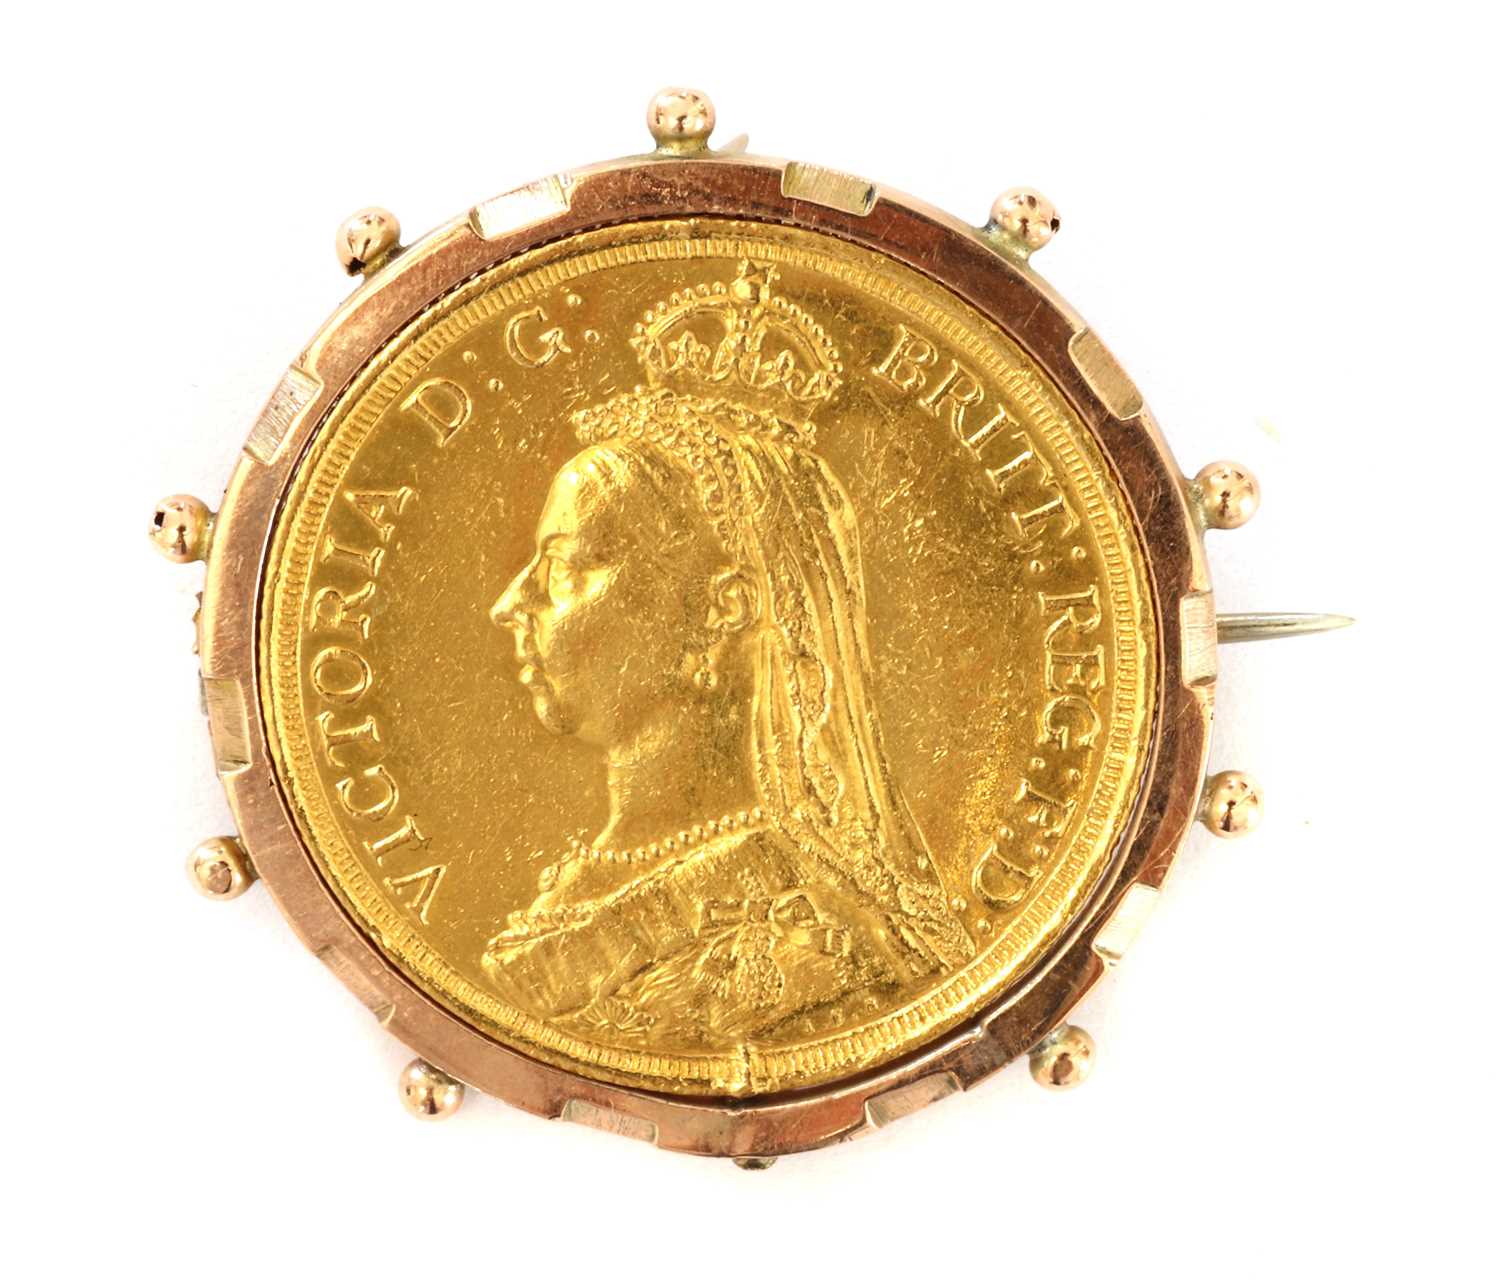 Lot 18 - Coins, Great Britain, Victoria (1837-1901)